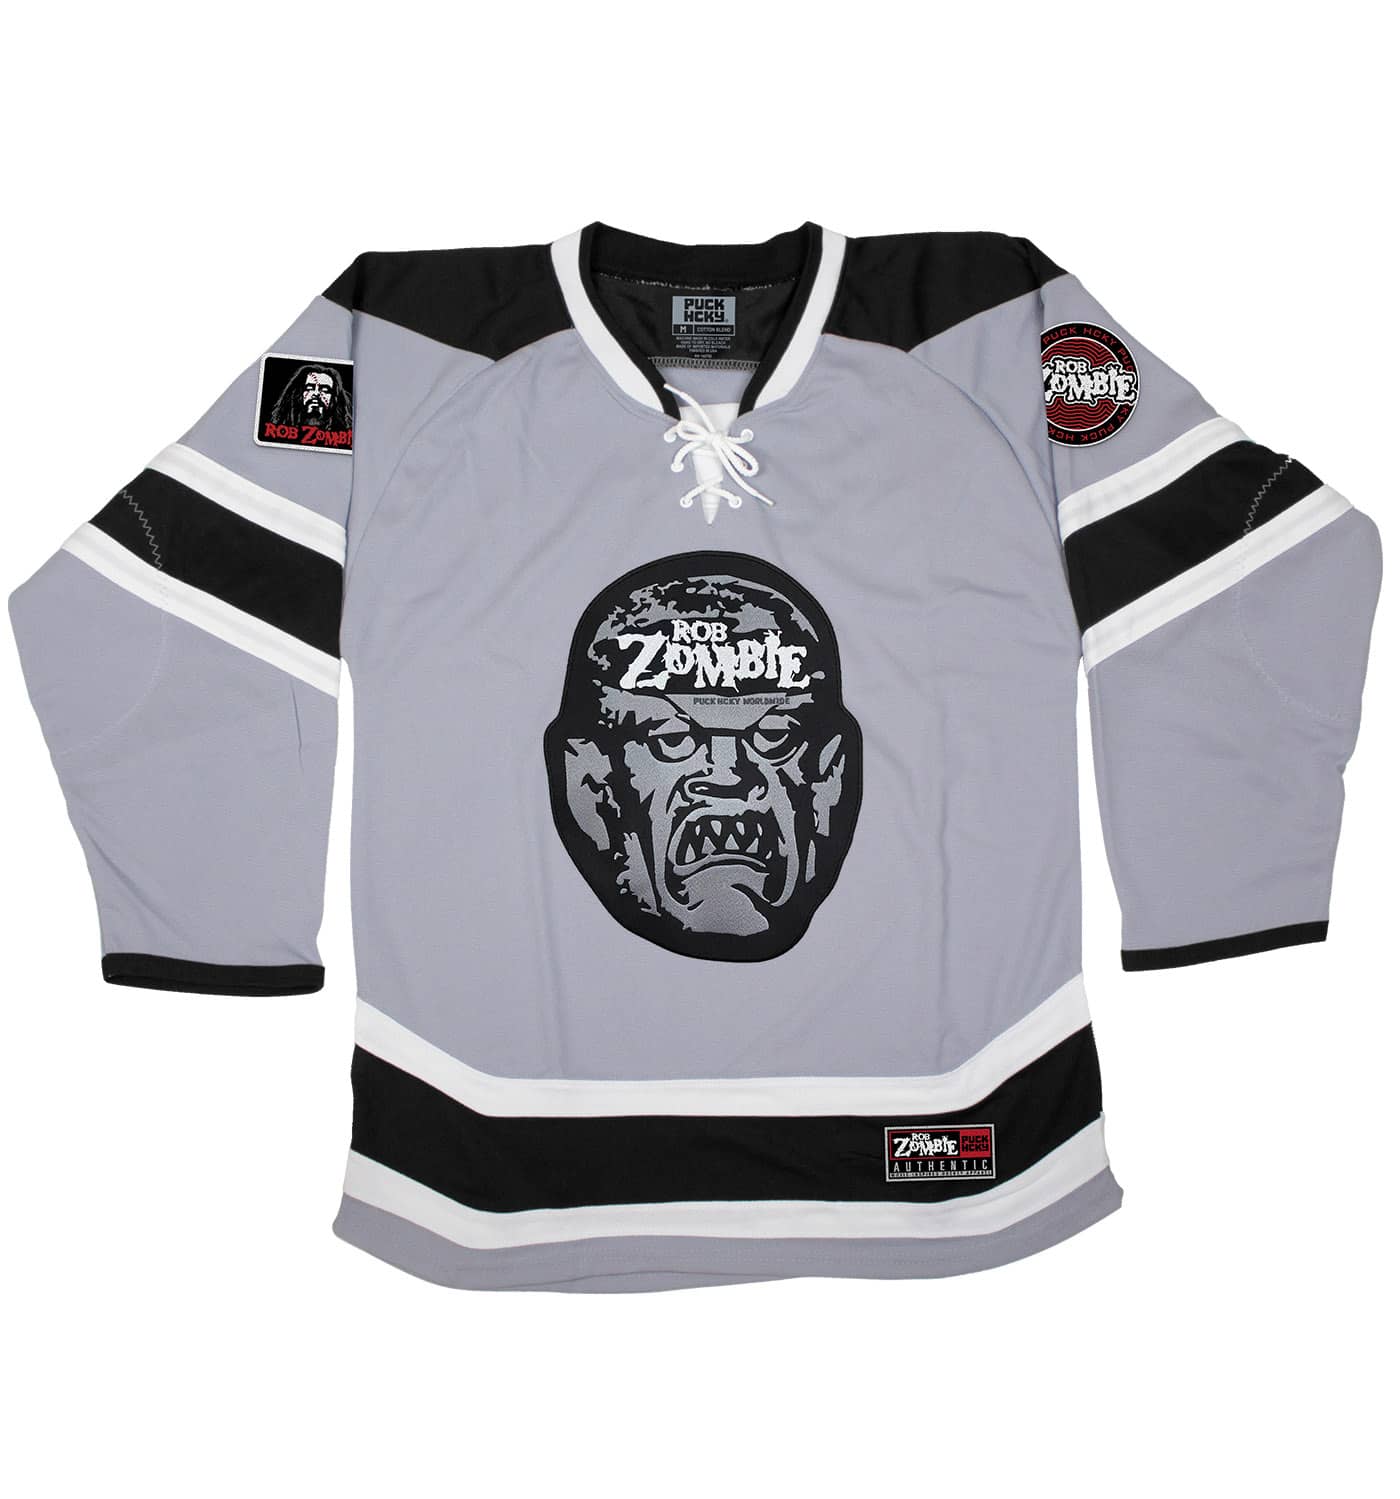 Source 4xl lace up custom hockey jersey on m.